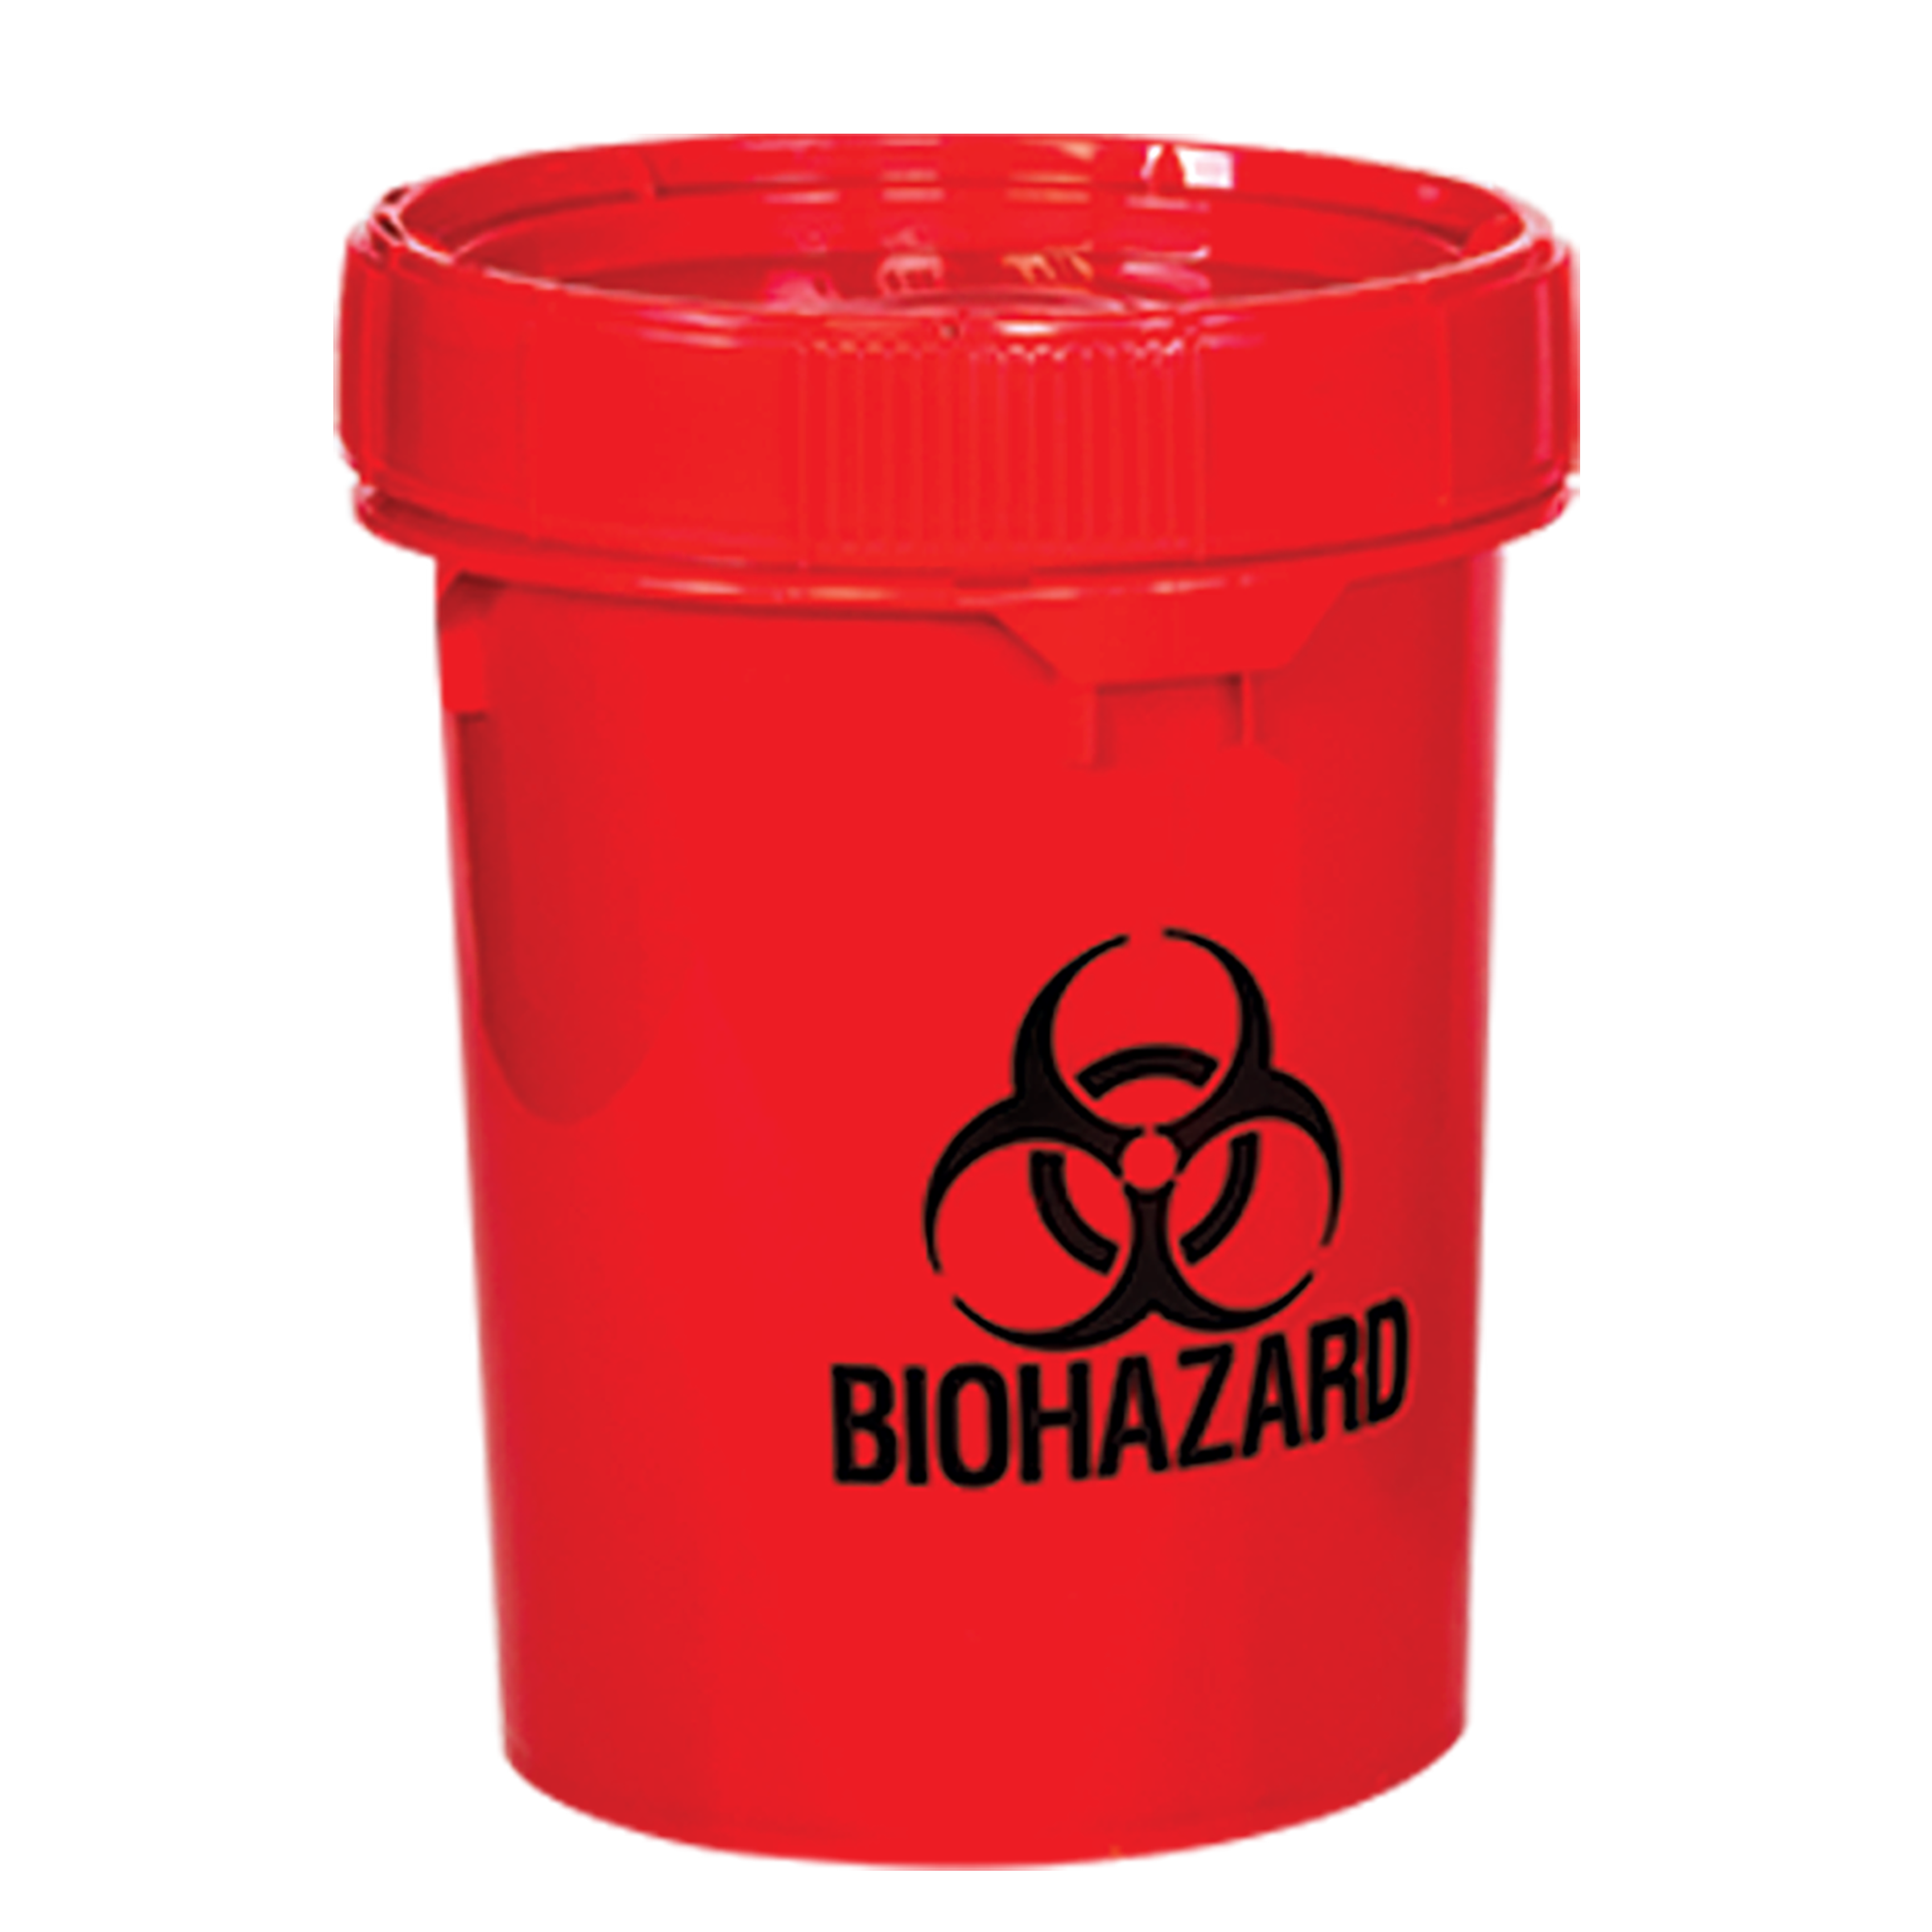 Practice Waste Solutions Biohazard/Sharps Container